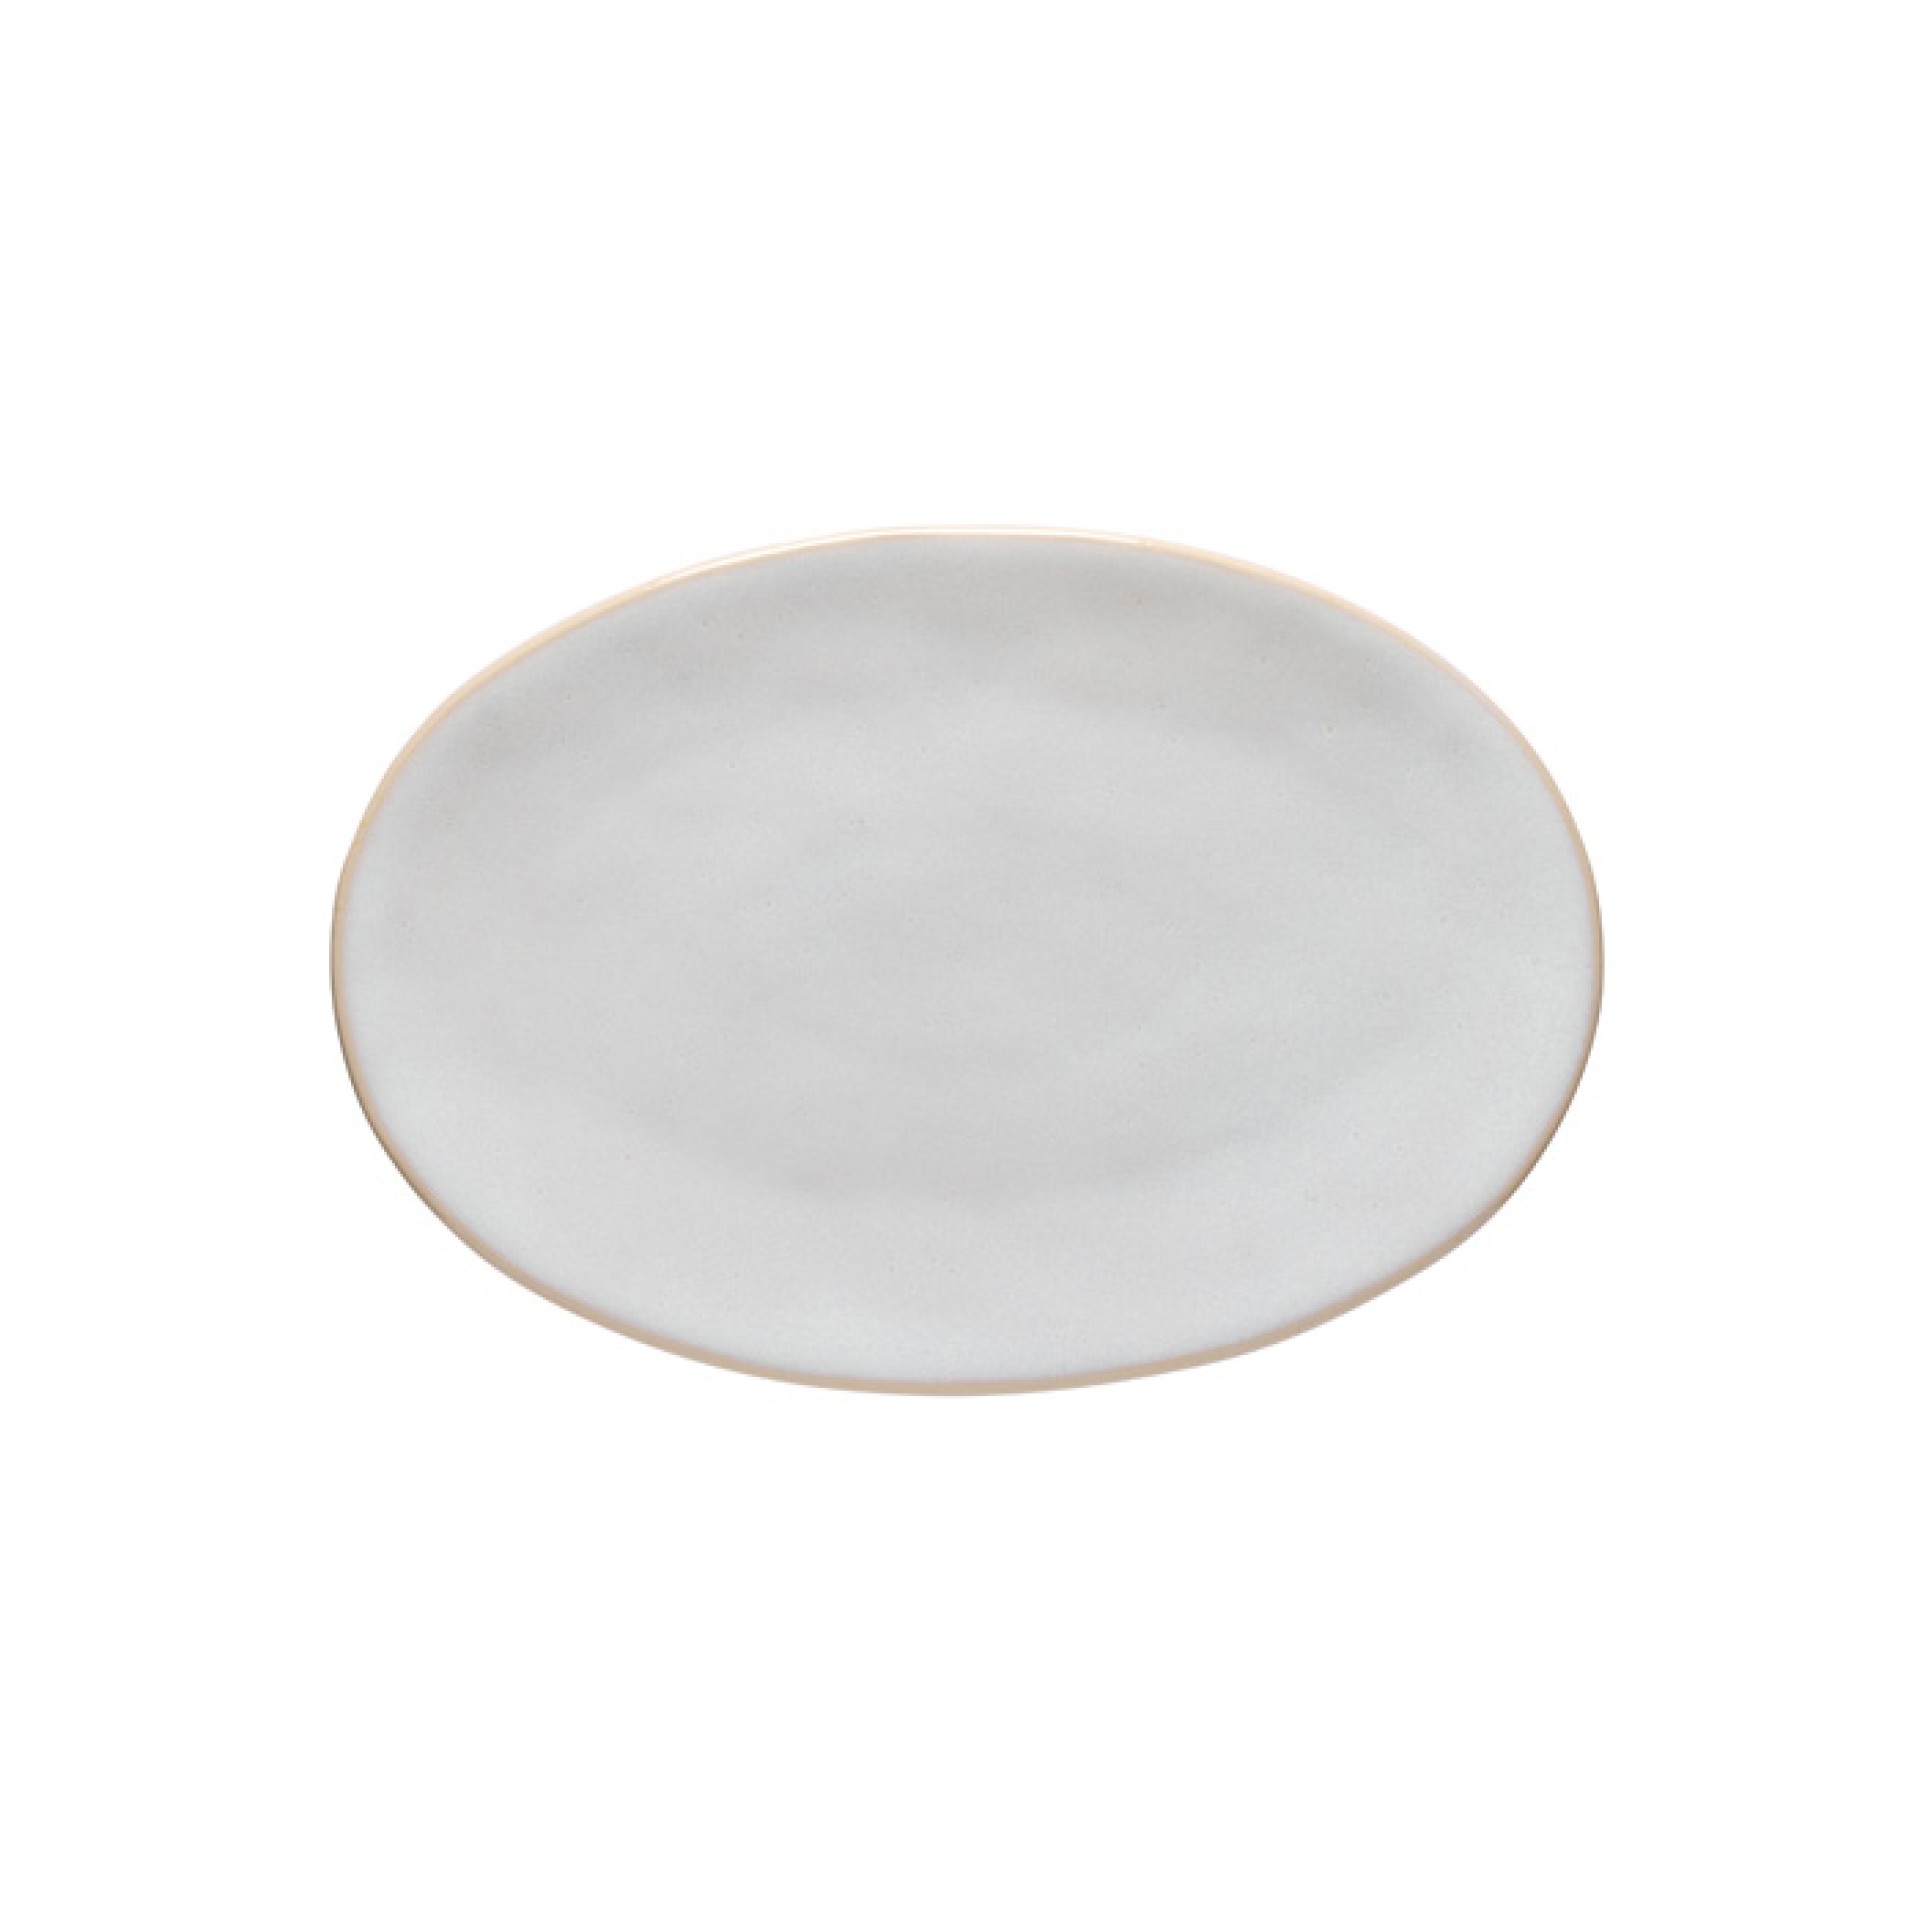 Oval Plate / Platter Roda